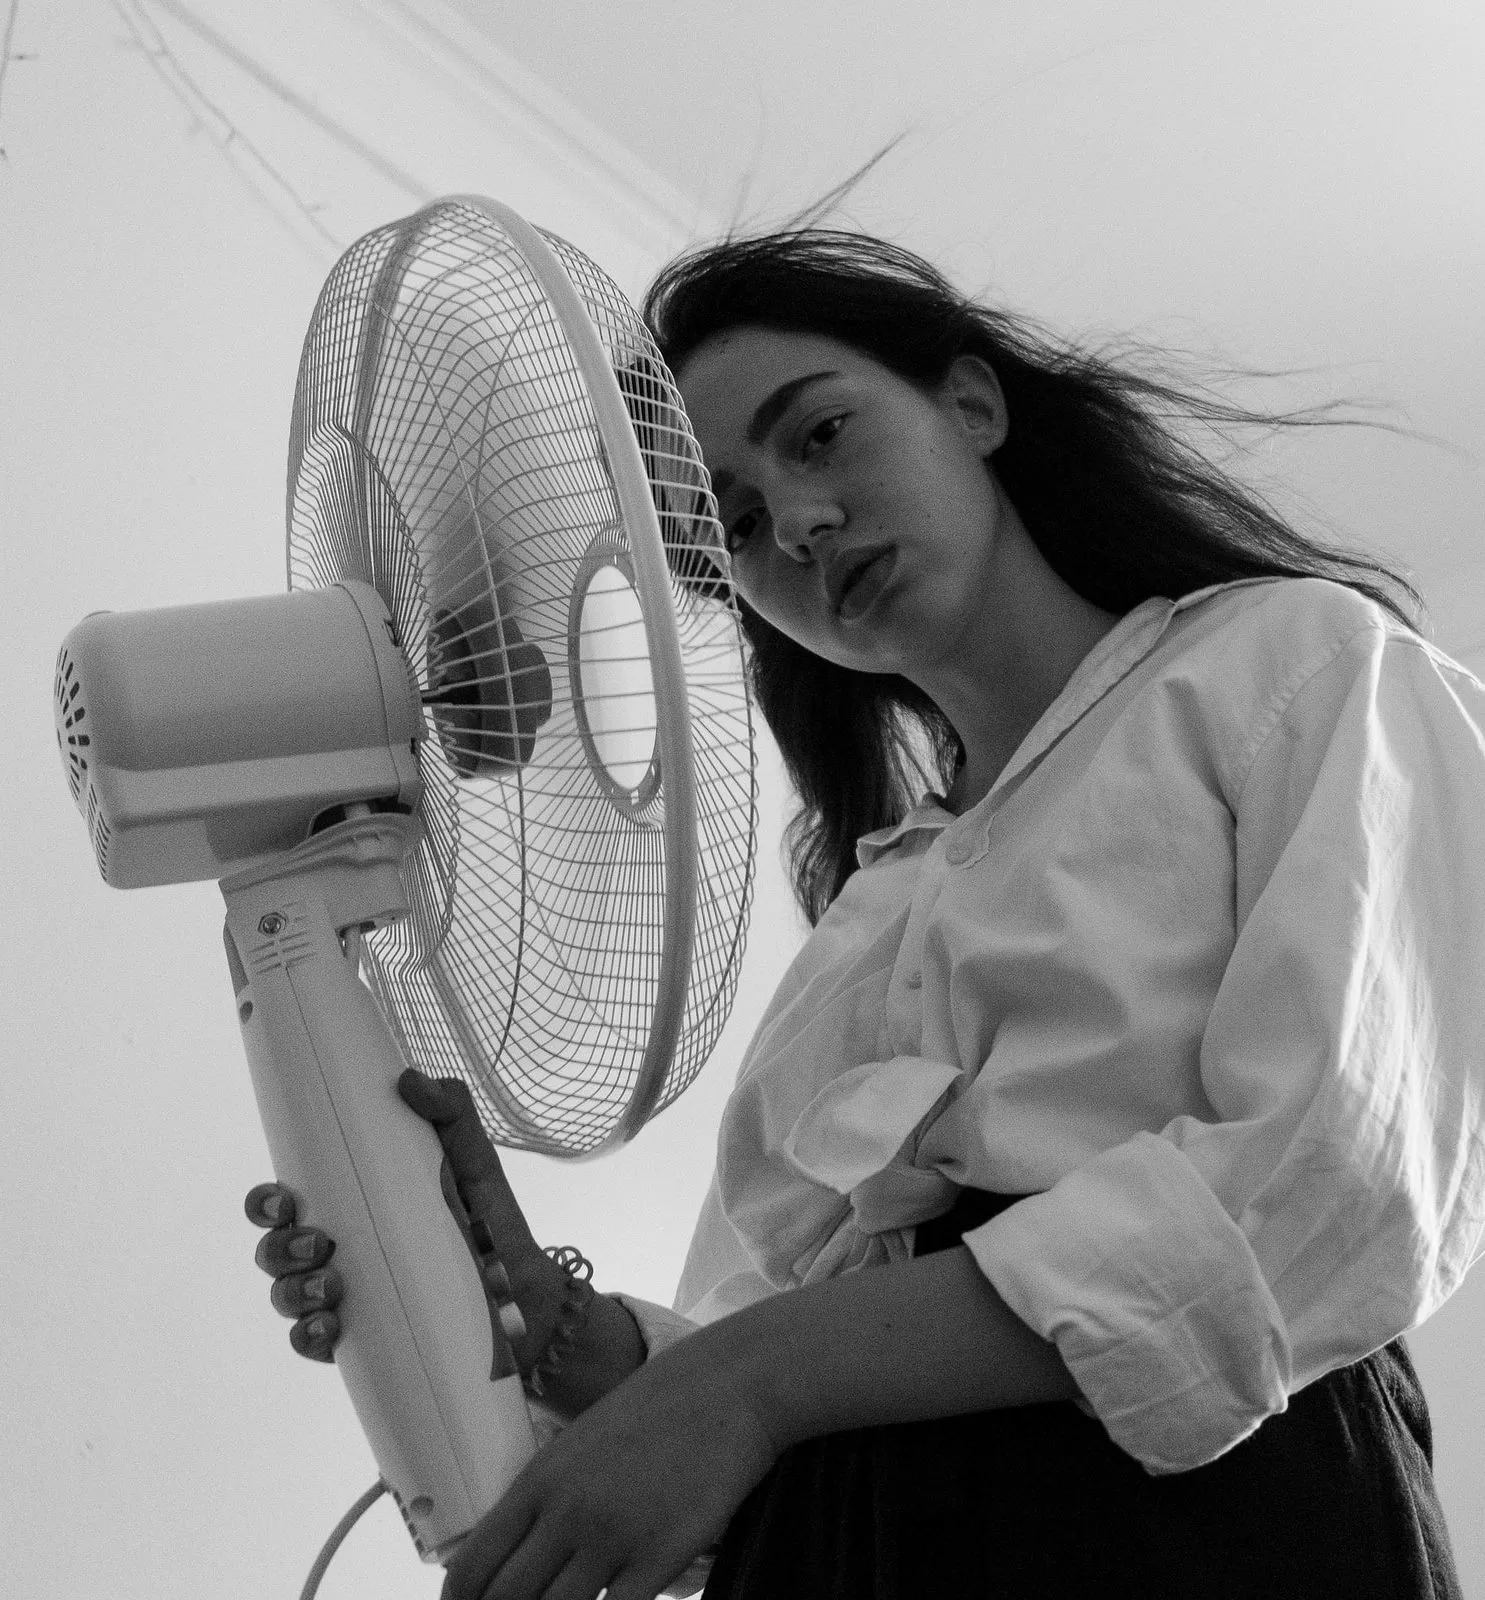 Вентилятором сушить волосы опасно / Фото: unsplash